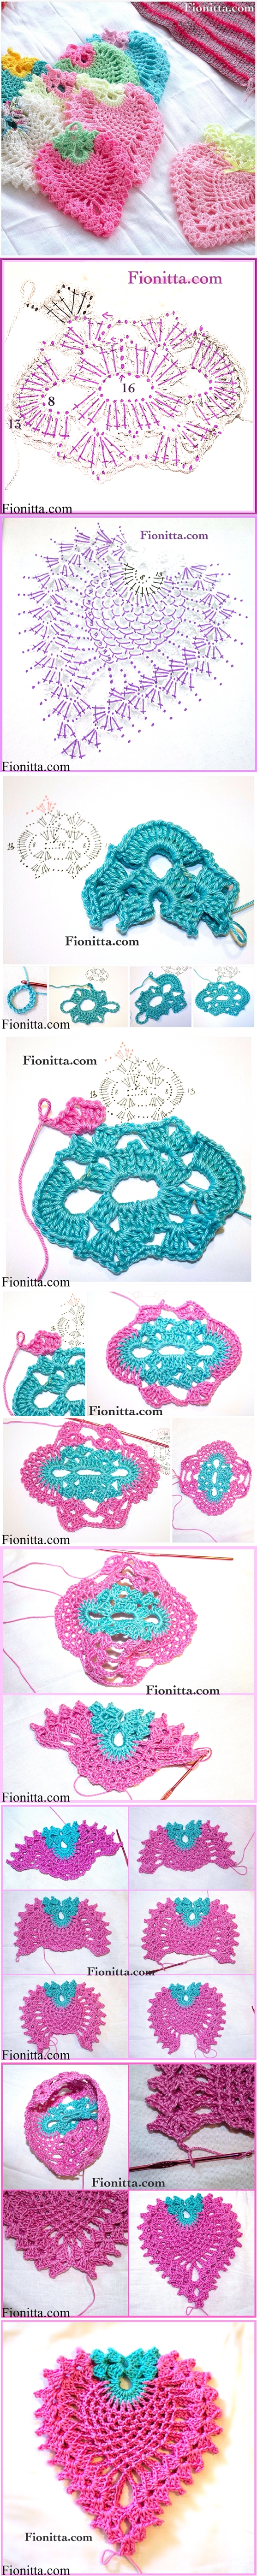 crochet strawberry pattern tutorial